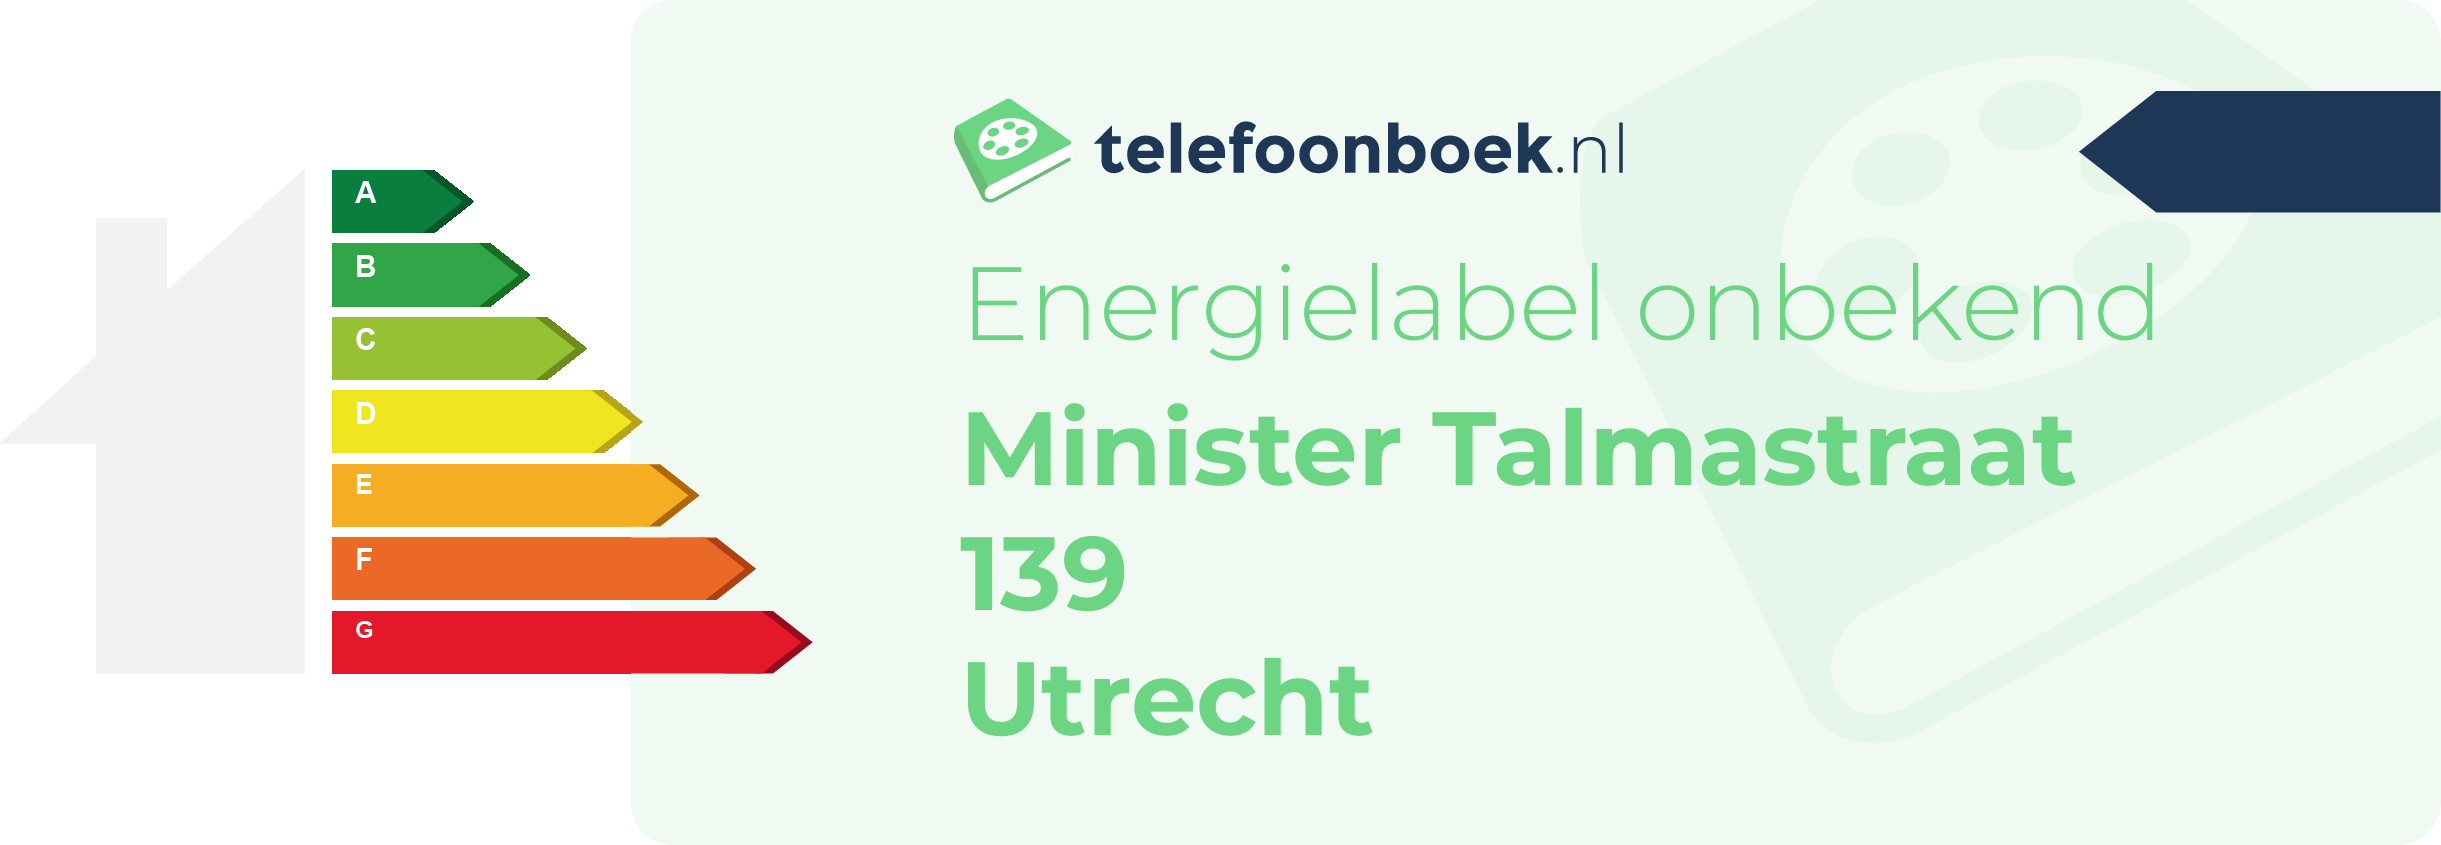 Energielabel Minister Talmastraat 139 Utrecht